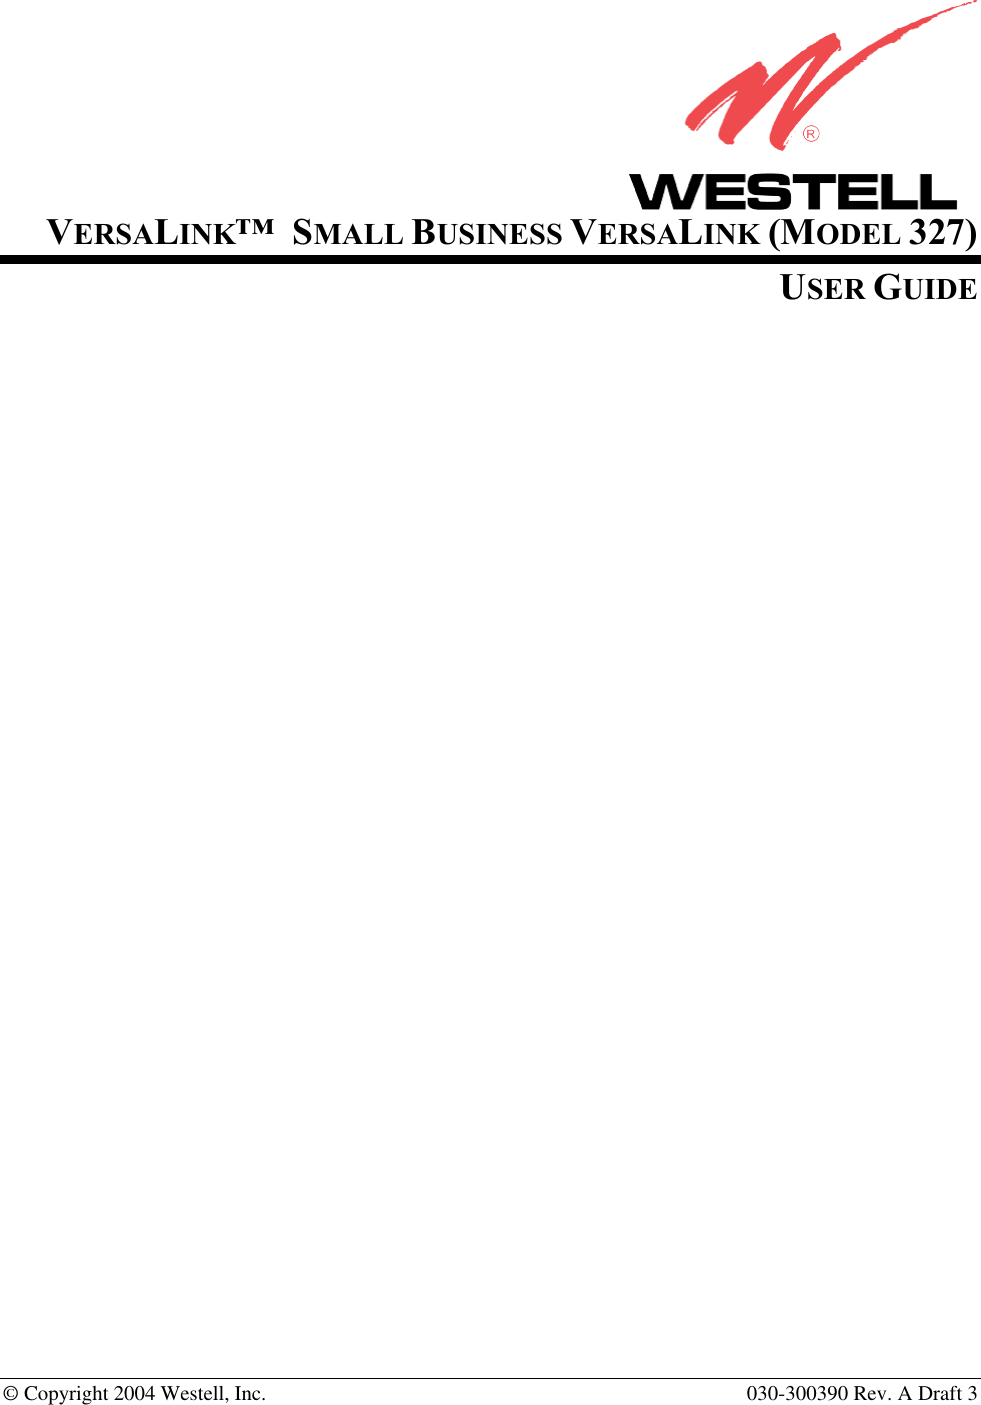  © Copyright 2004 Westell, Inc.   030-300390 Rev. A Draft 3                    VERSALINK™  SMALL BUSINESS VERSALINK (MODEL 327) USER GUIDE              